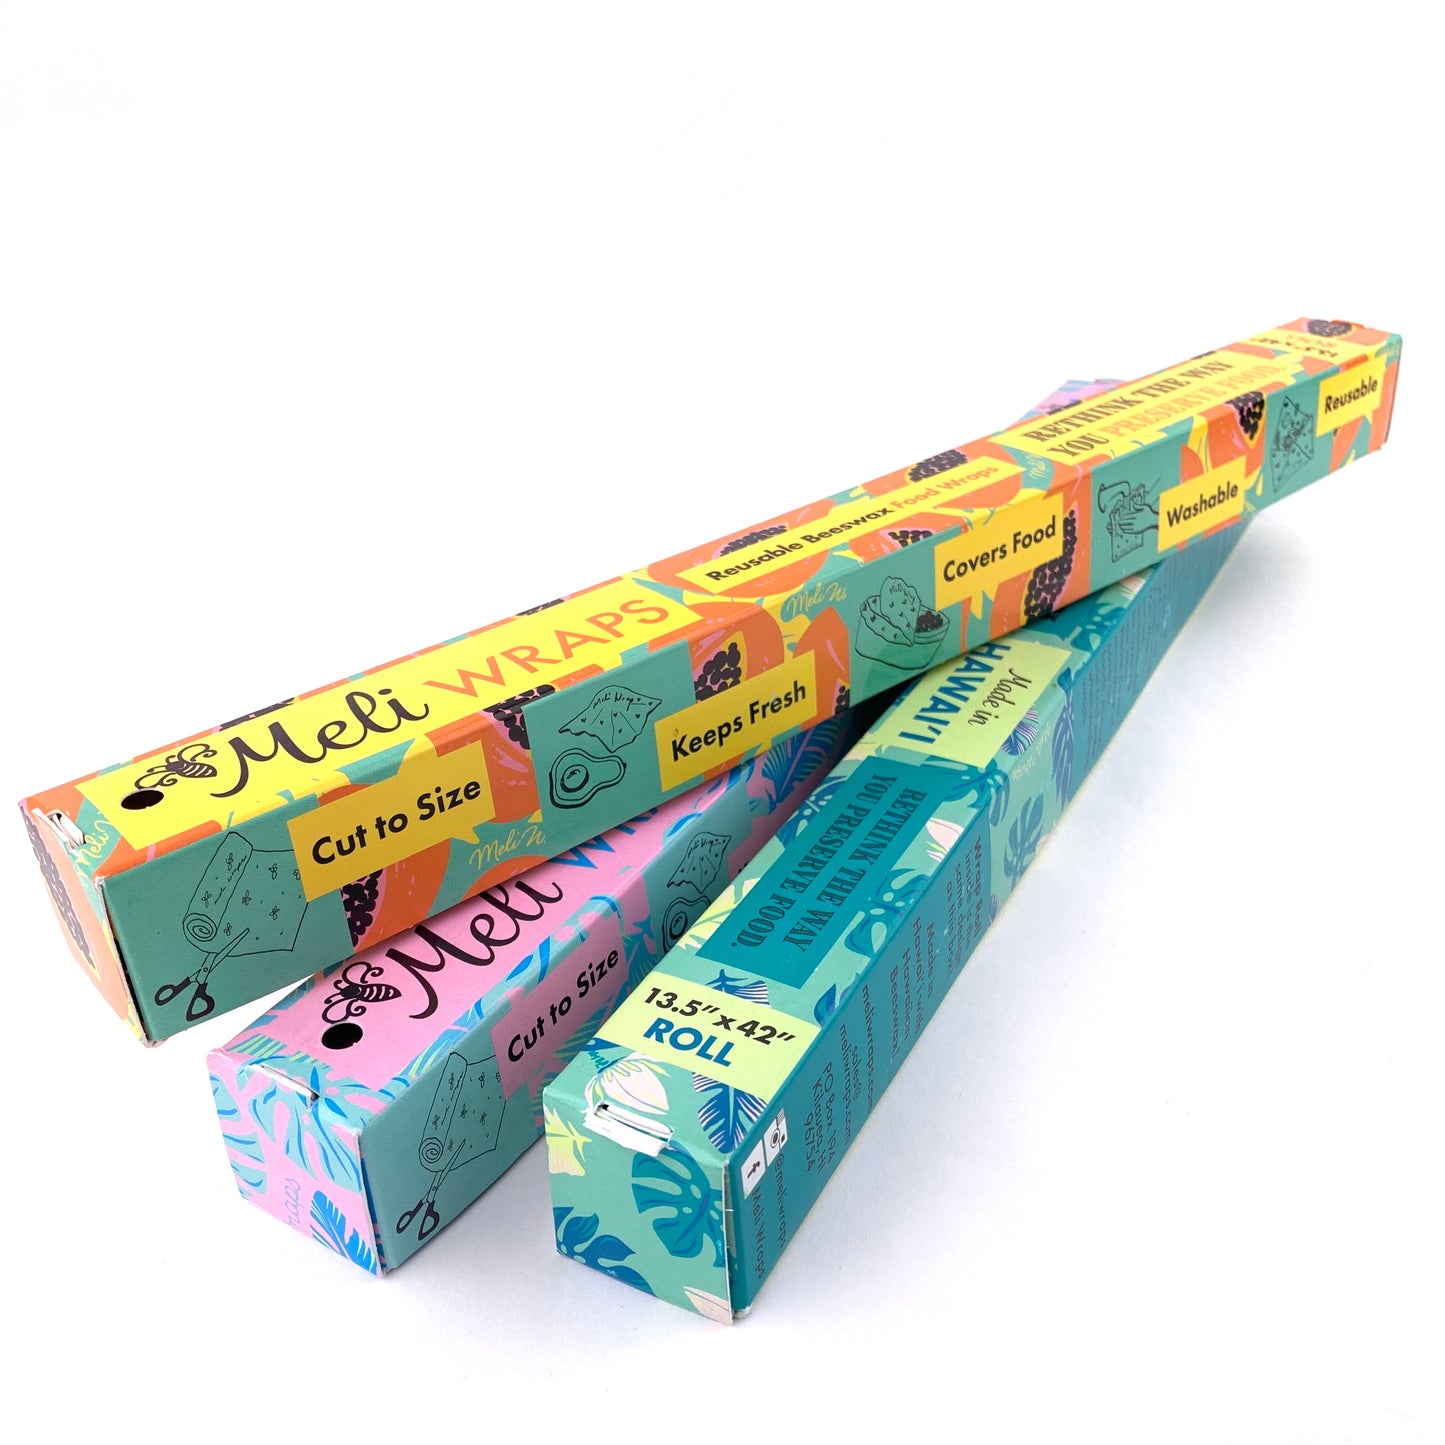 Meli Beeswax Wrap Roll - Papaya Print